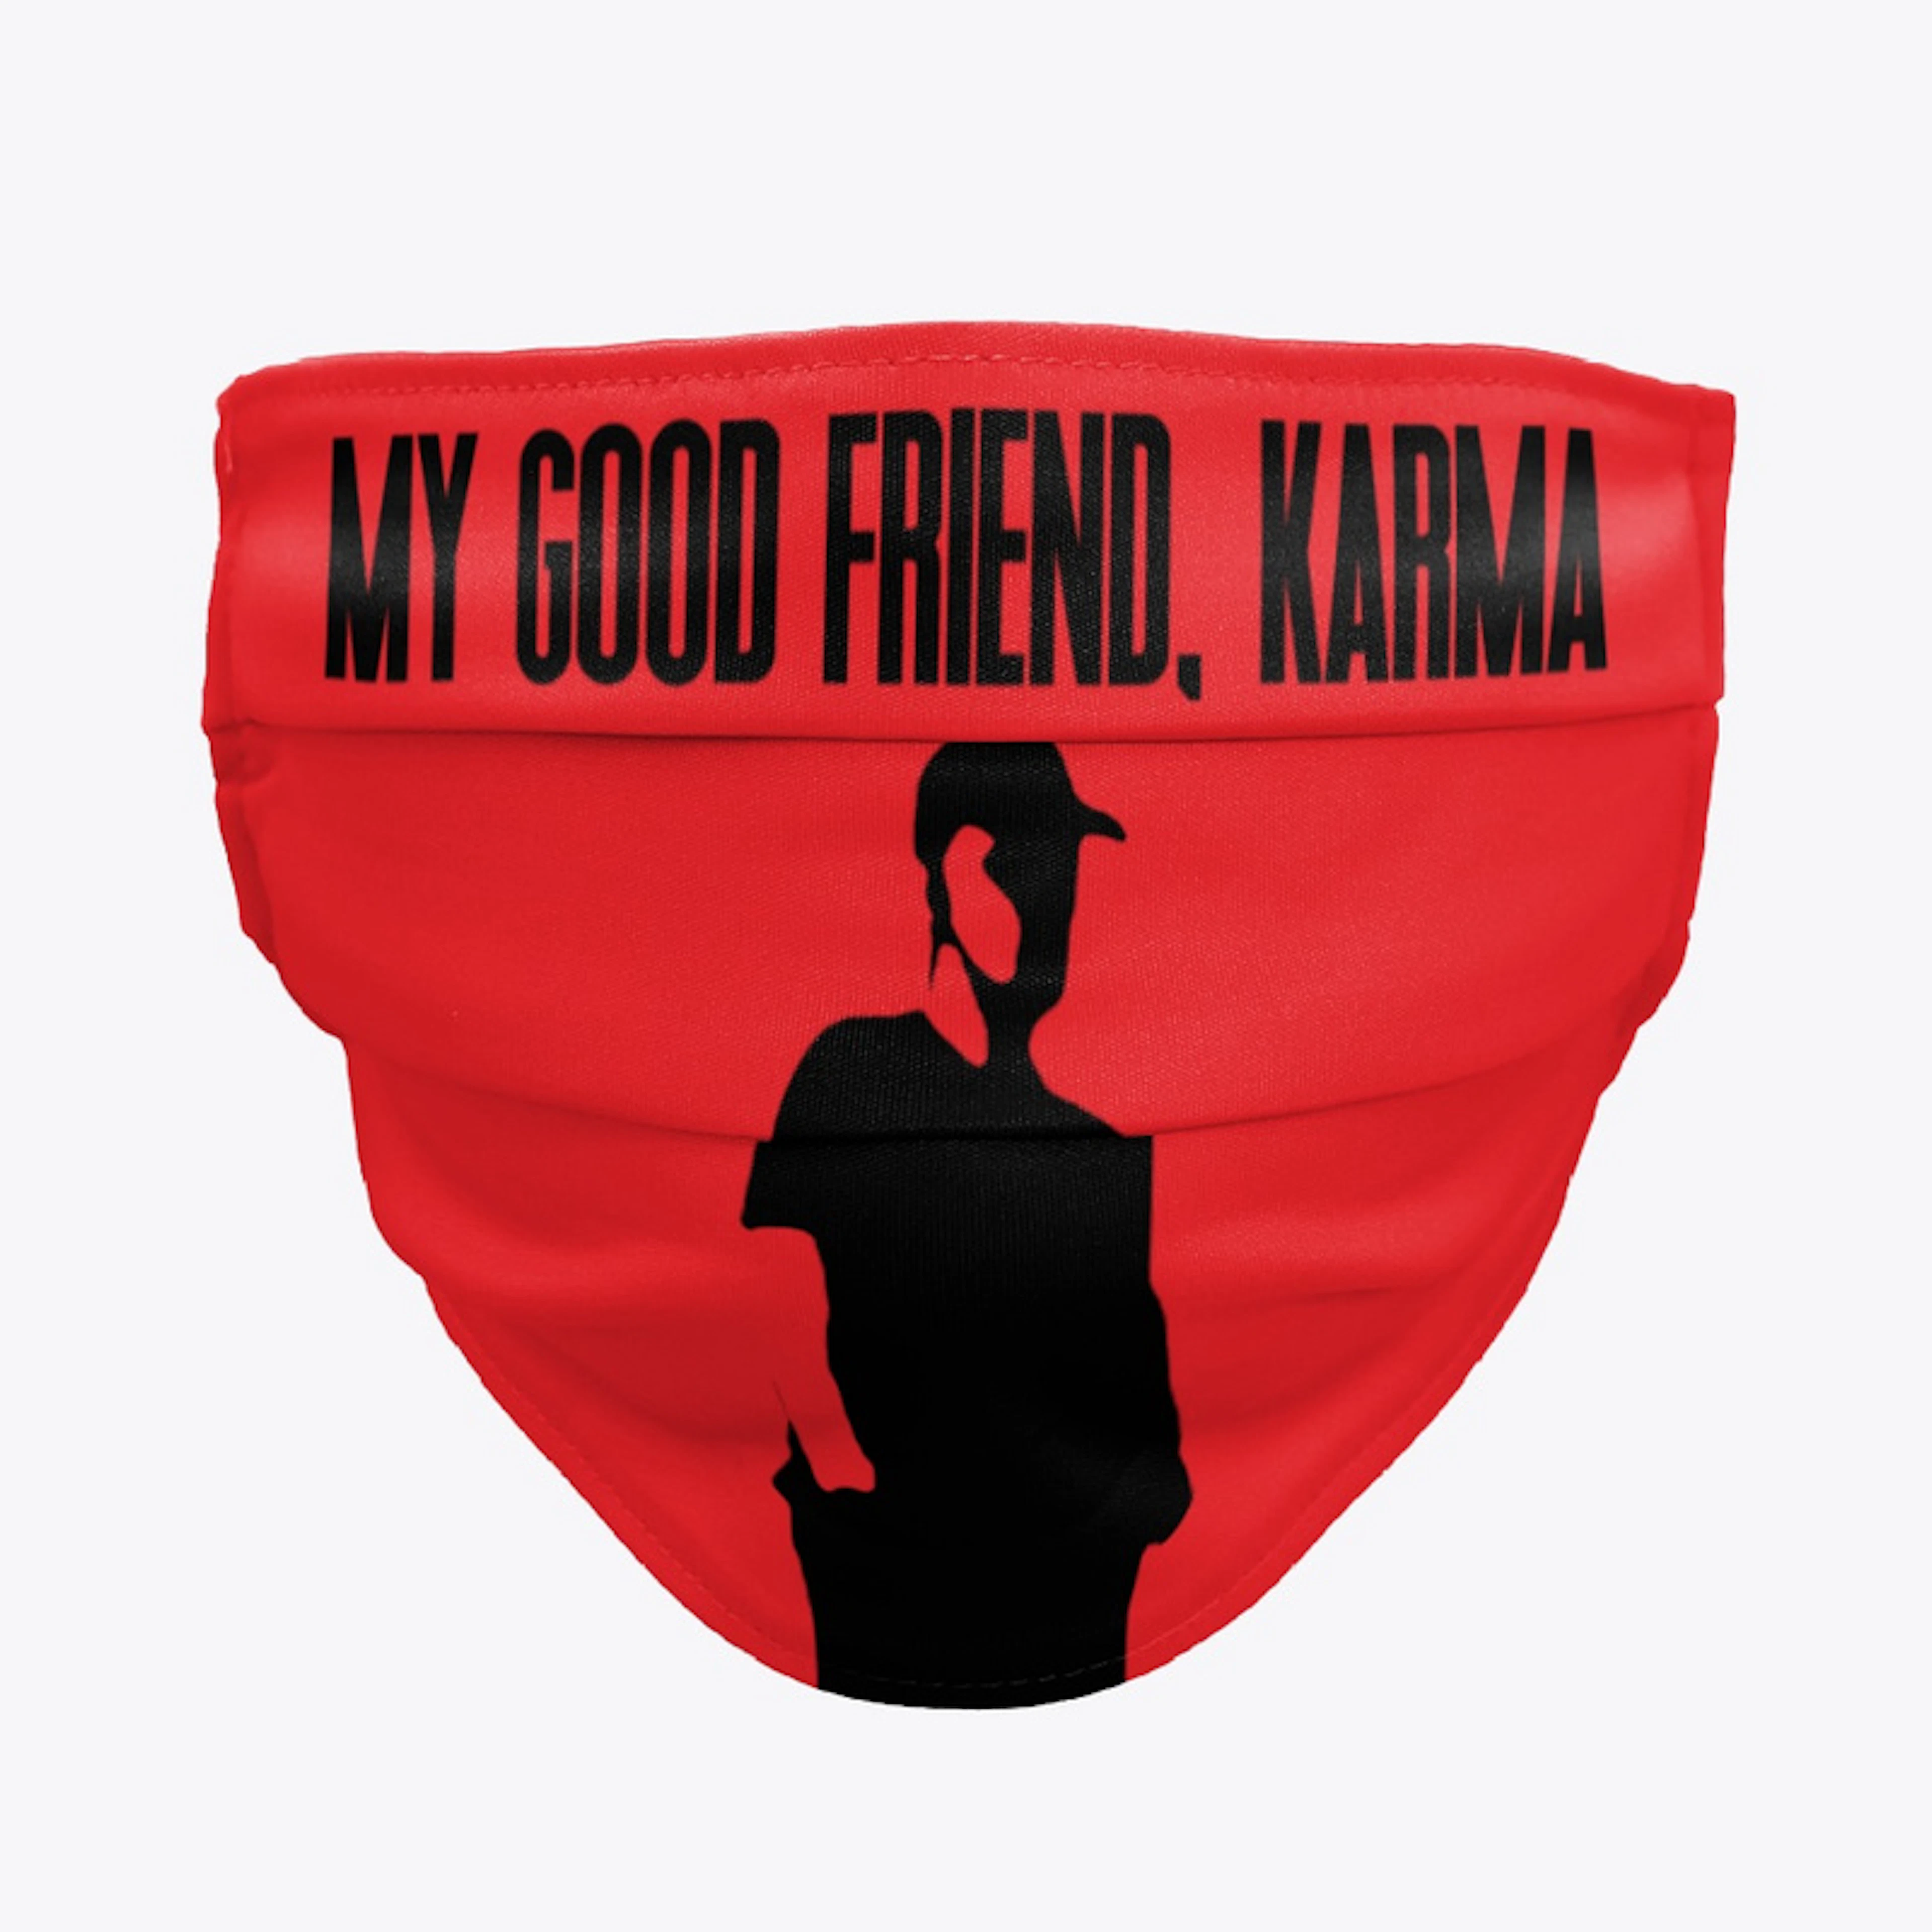 "My Good Friend, Karma" Merch